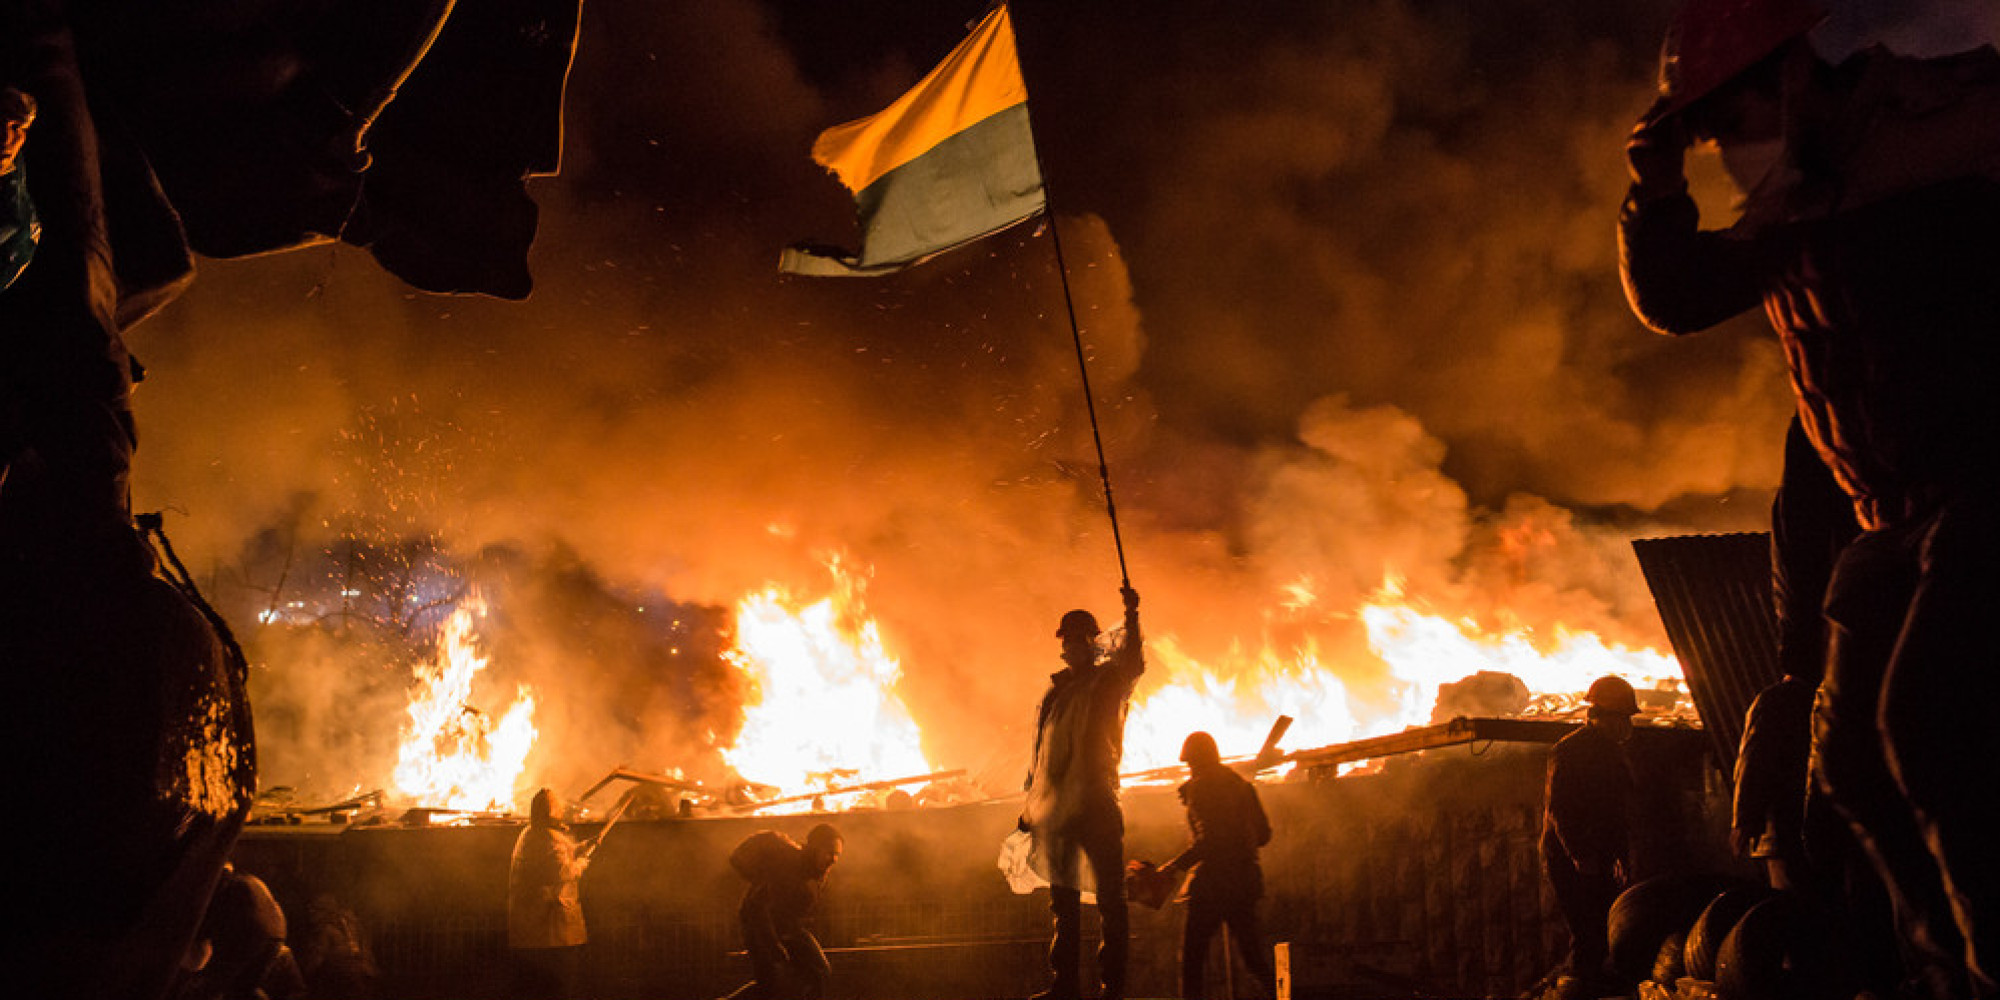 Amazing Kiev Revolution Pictures & Backgrounds